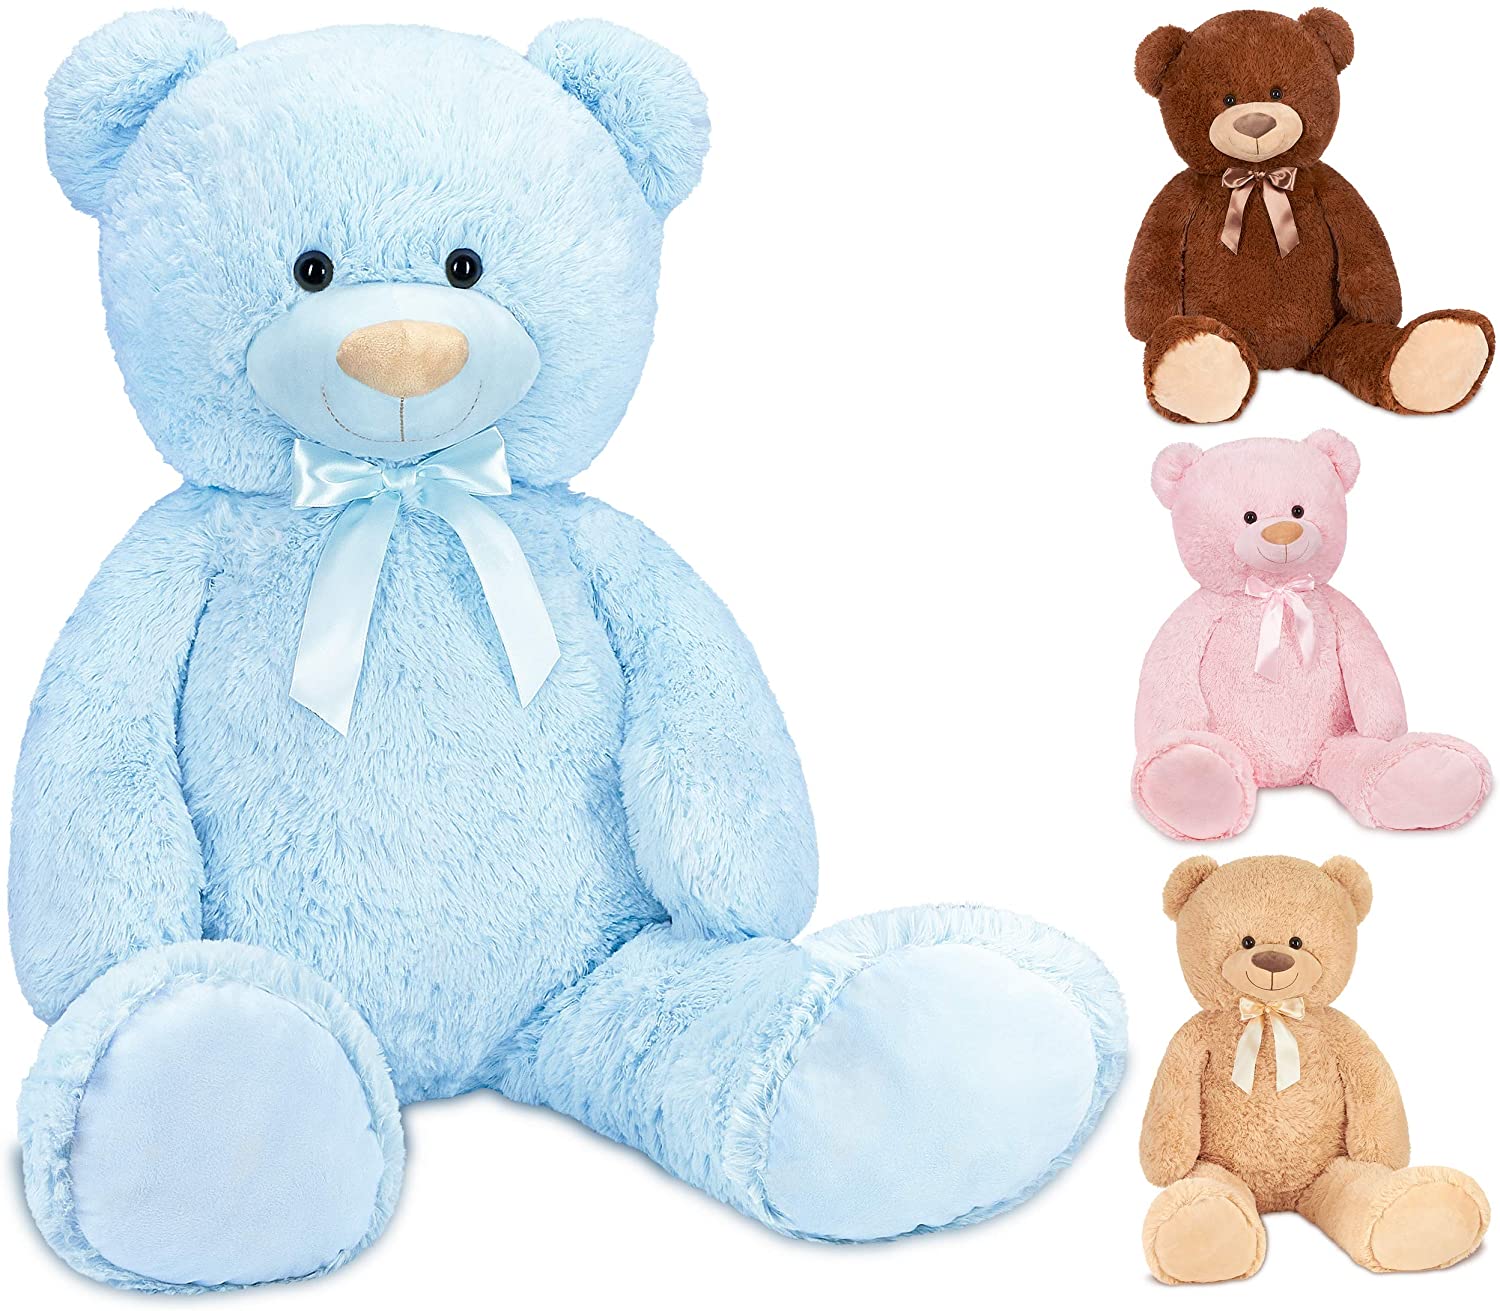 Teddybär Blau 50 cm groß mit Schleife Kuscheltier Teddy Kuschelbär Bär 